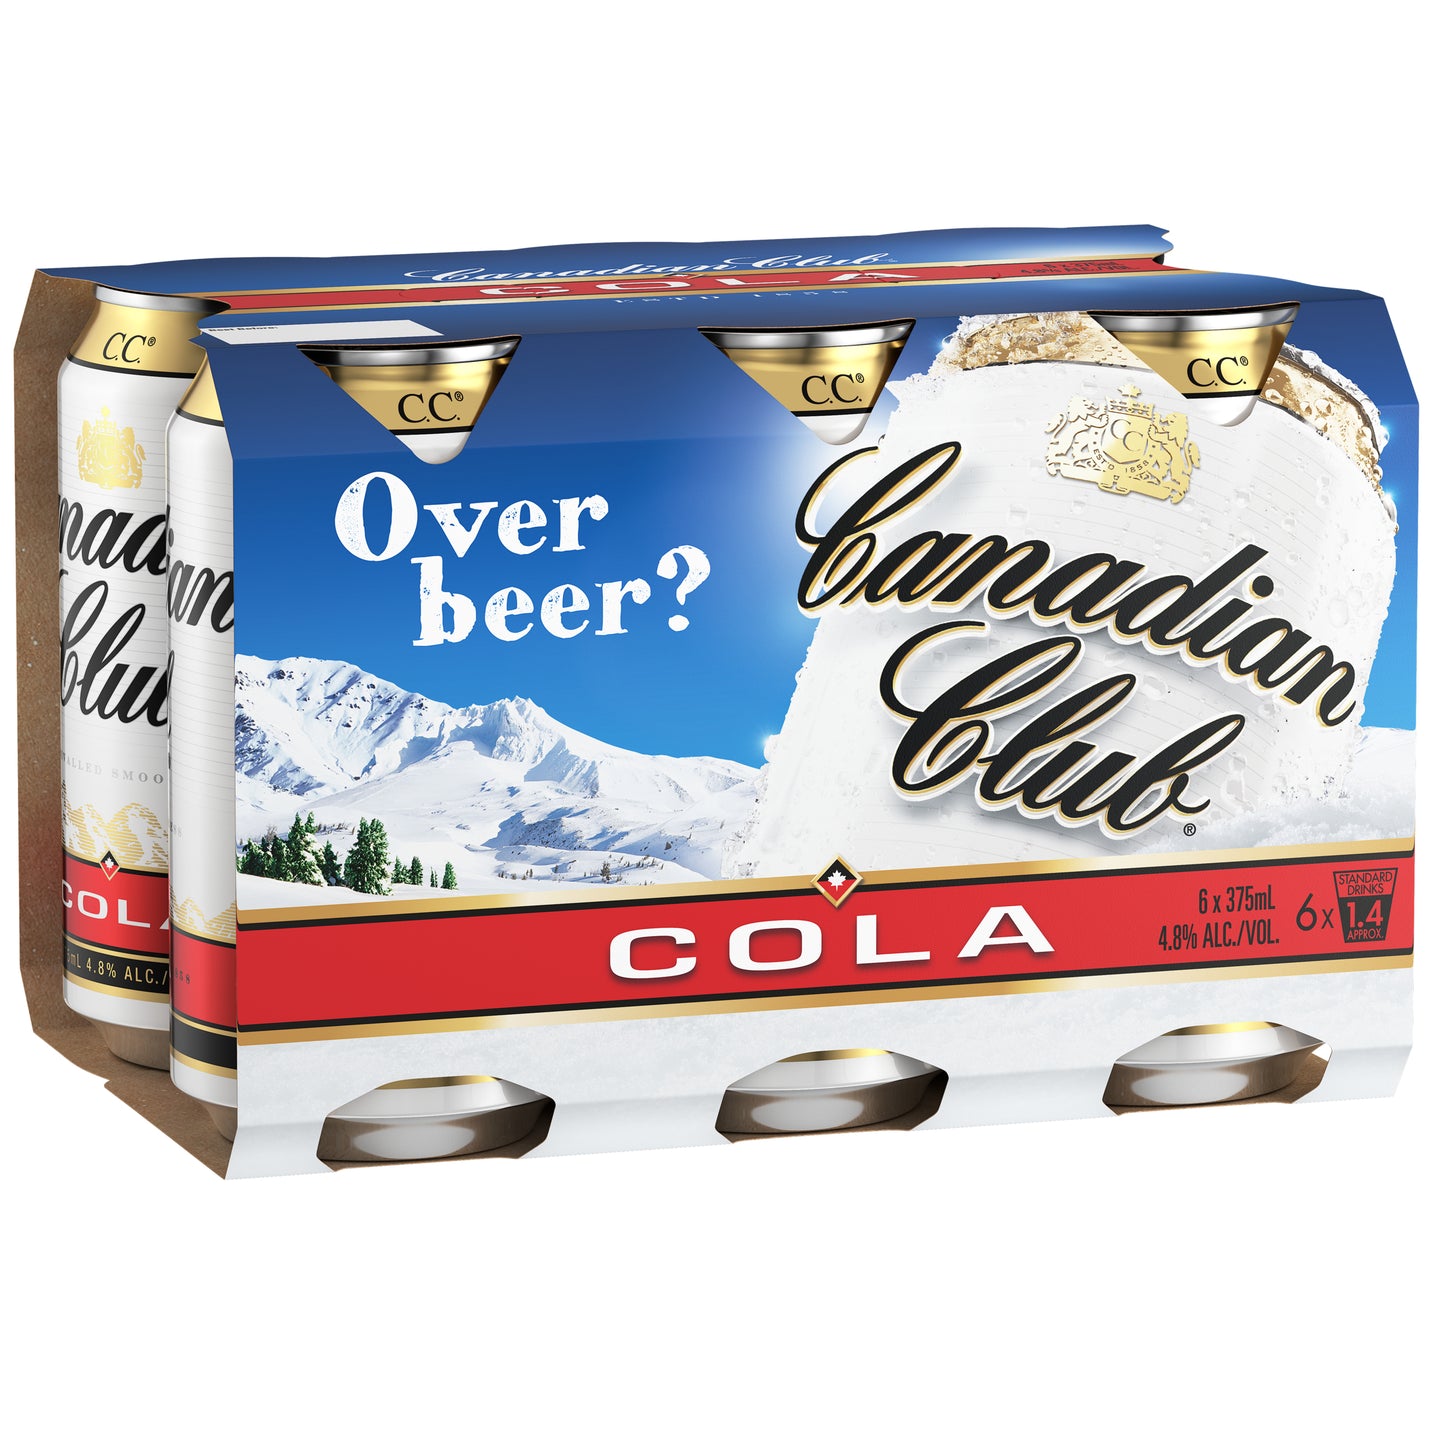 Canadian Club & Cola 6x375mL Cans